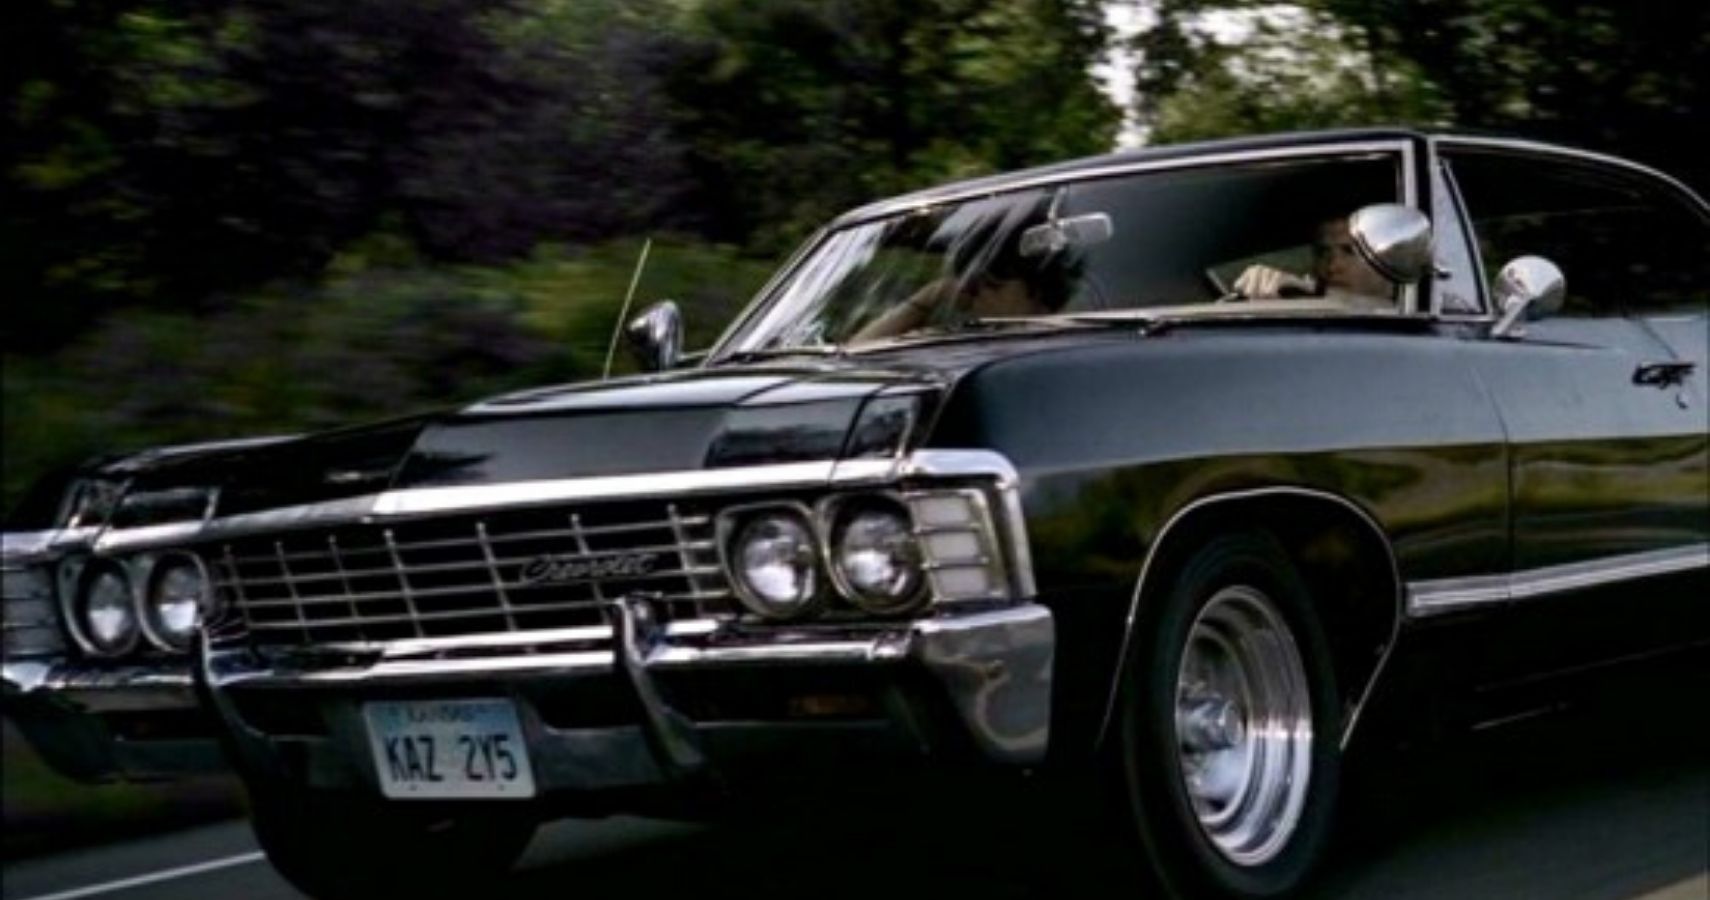 1967 Chevy Impala from Supernatural, PrettyMotors.com